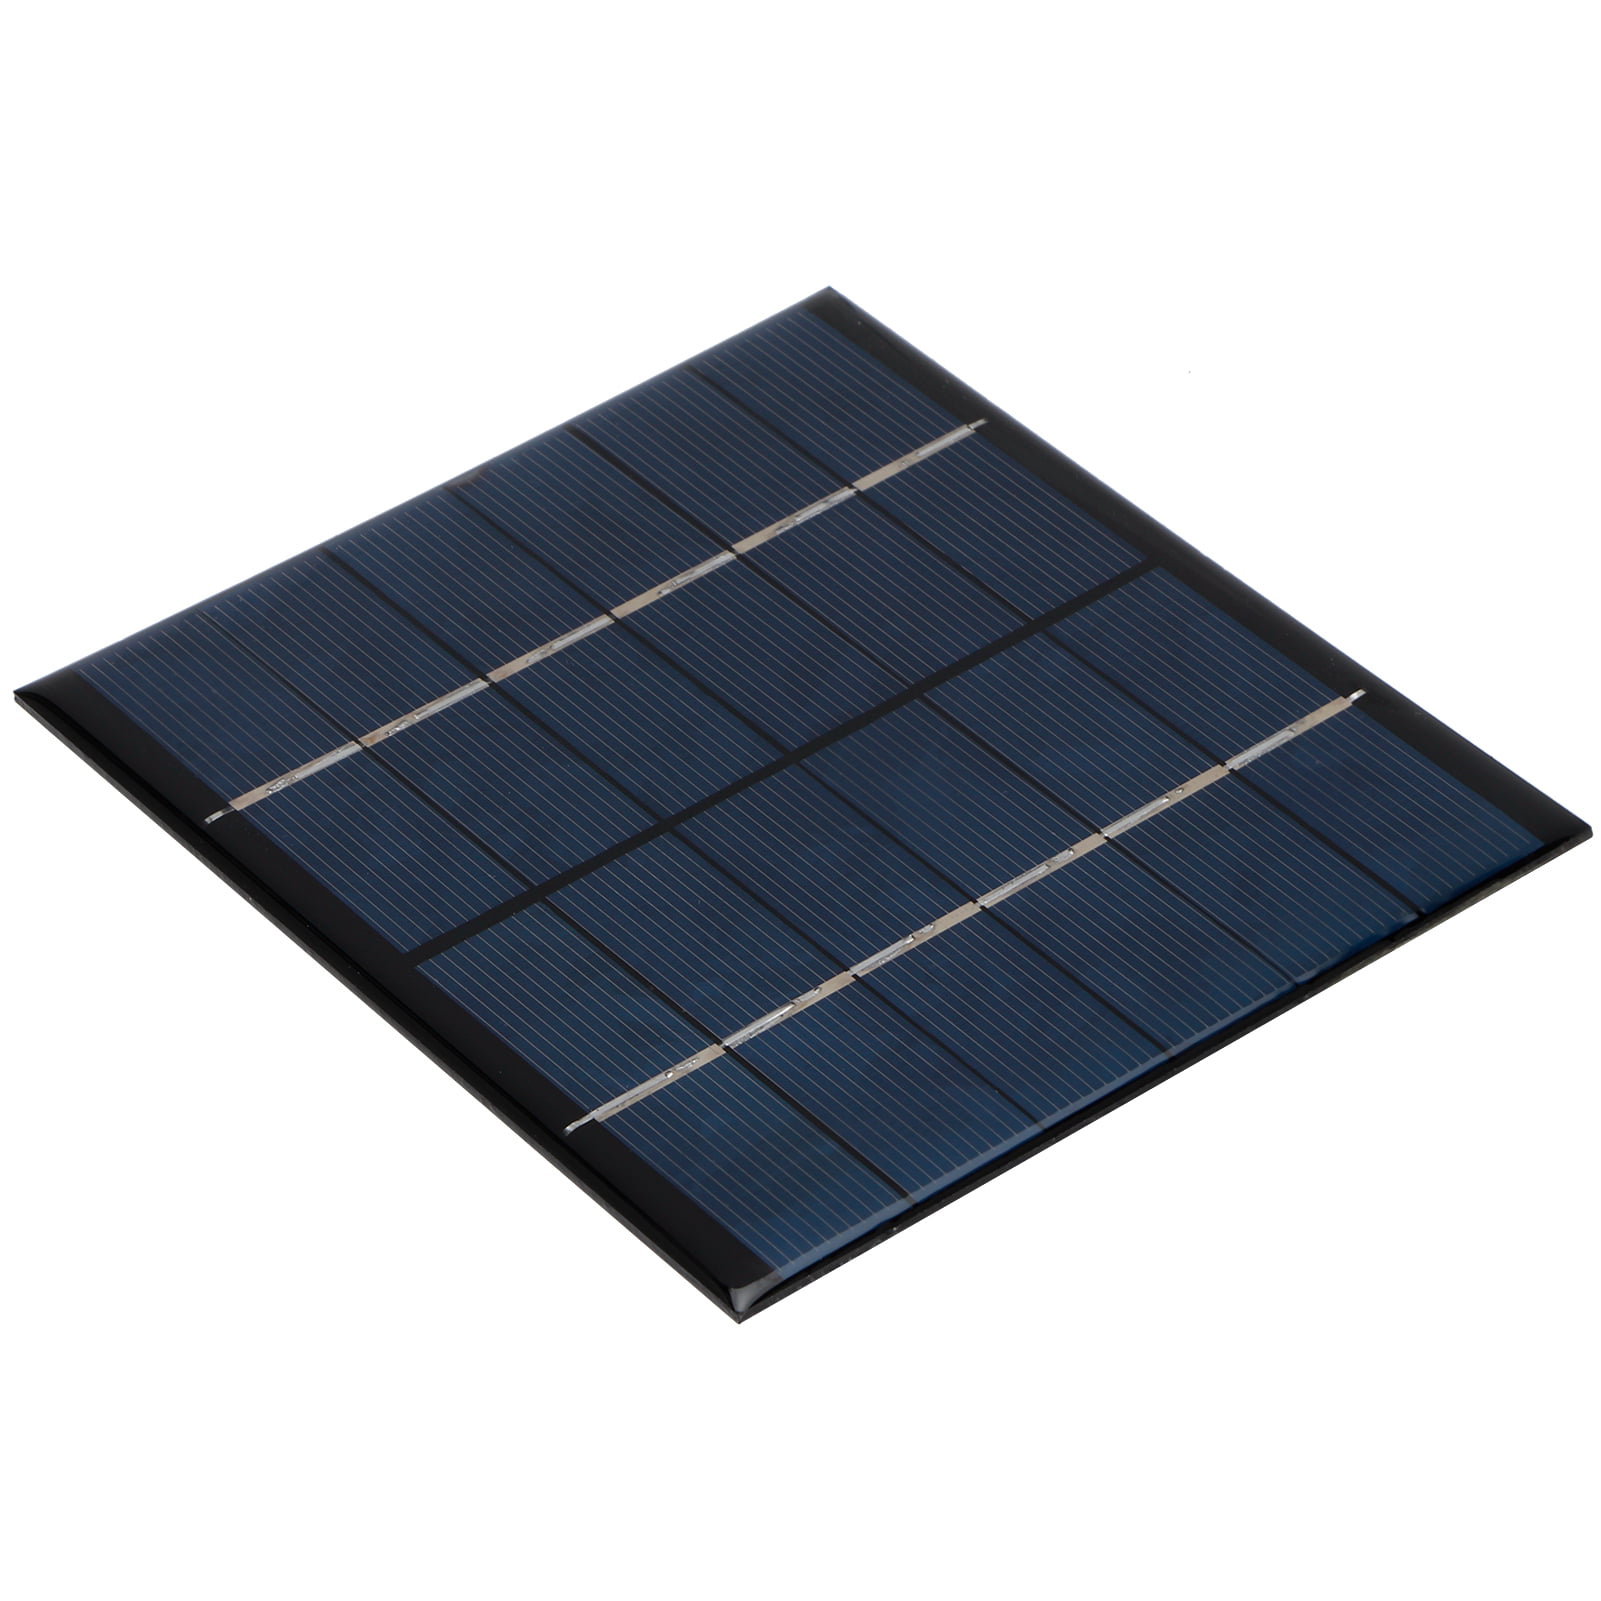 Portable 2W 6V 330mA Polysilicon Solar Power Panel DIY Kit Battery Panel 